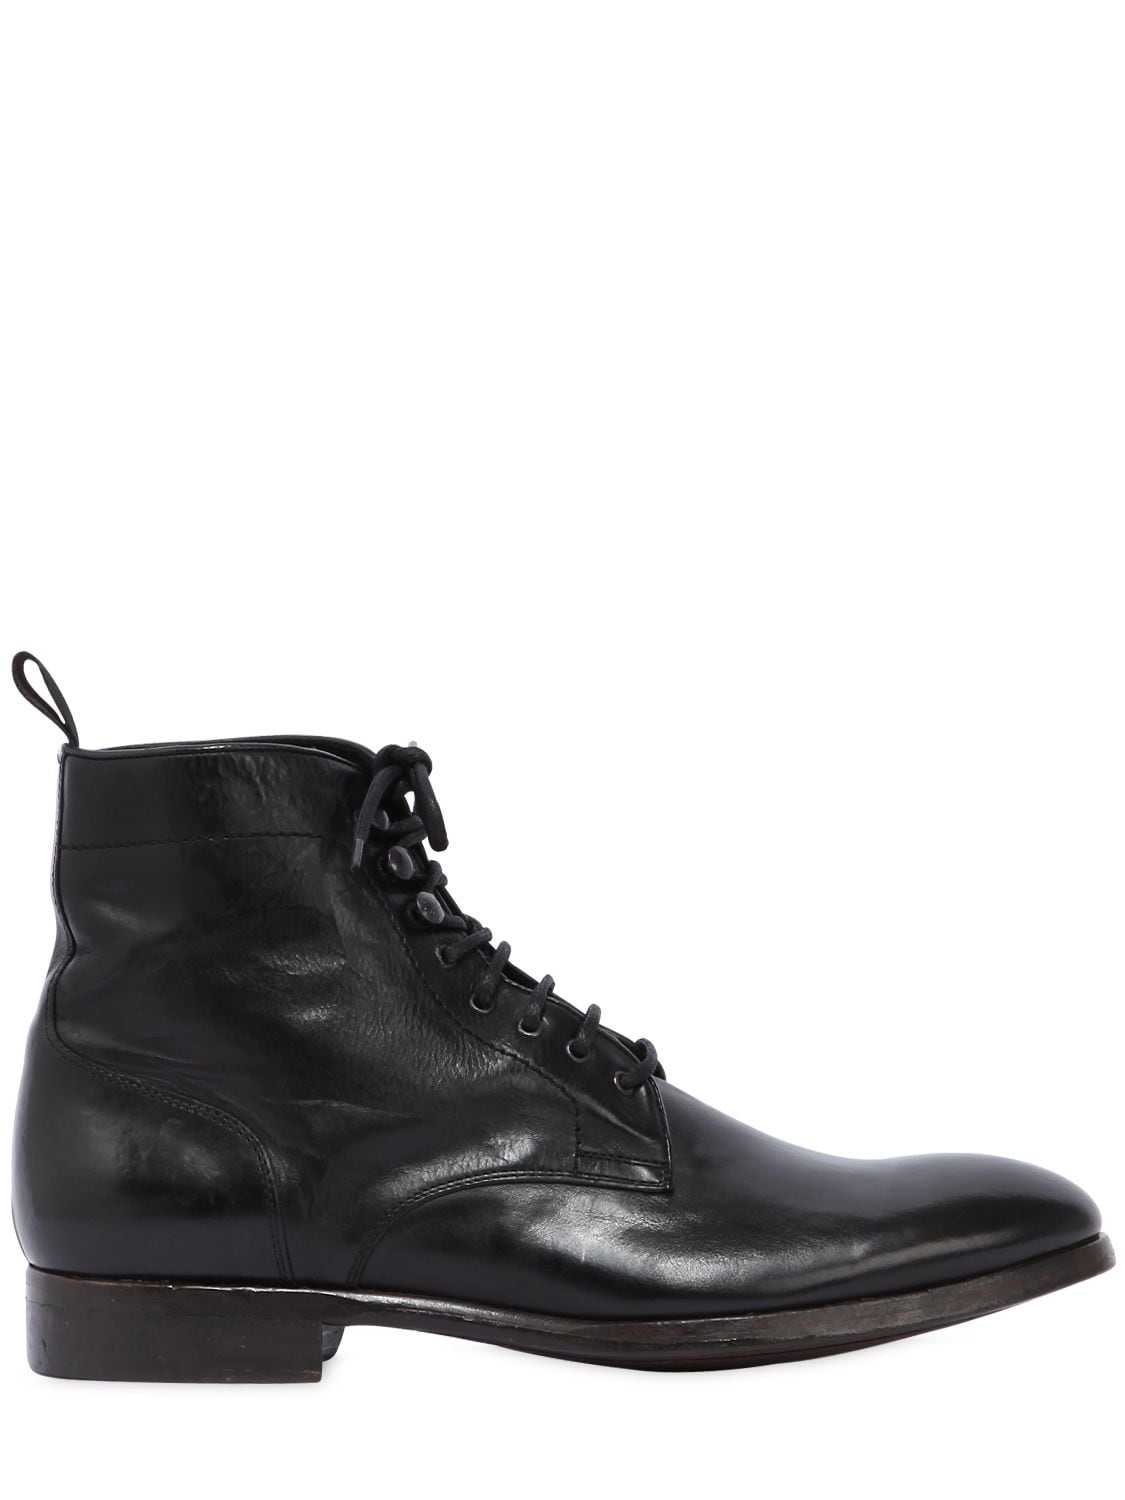 Rolando Sturlini Washed Leather Boots In Black | ModeSens